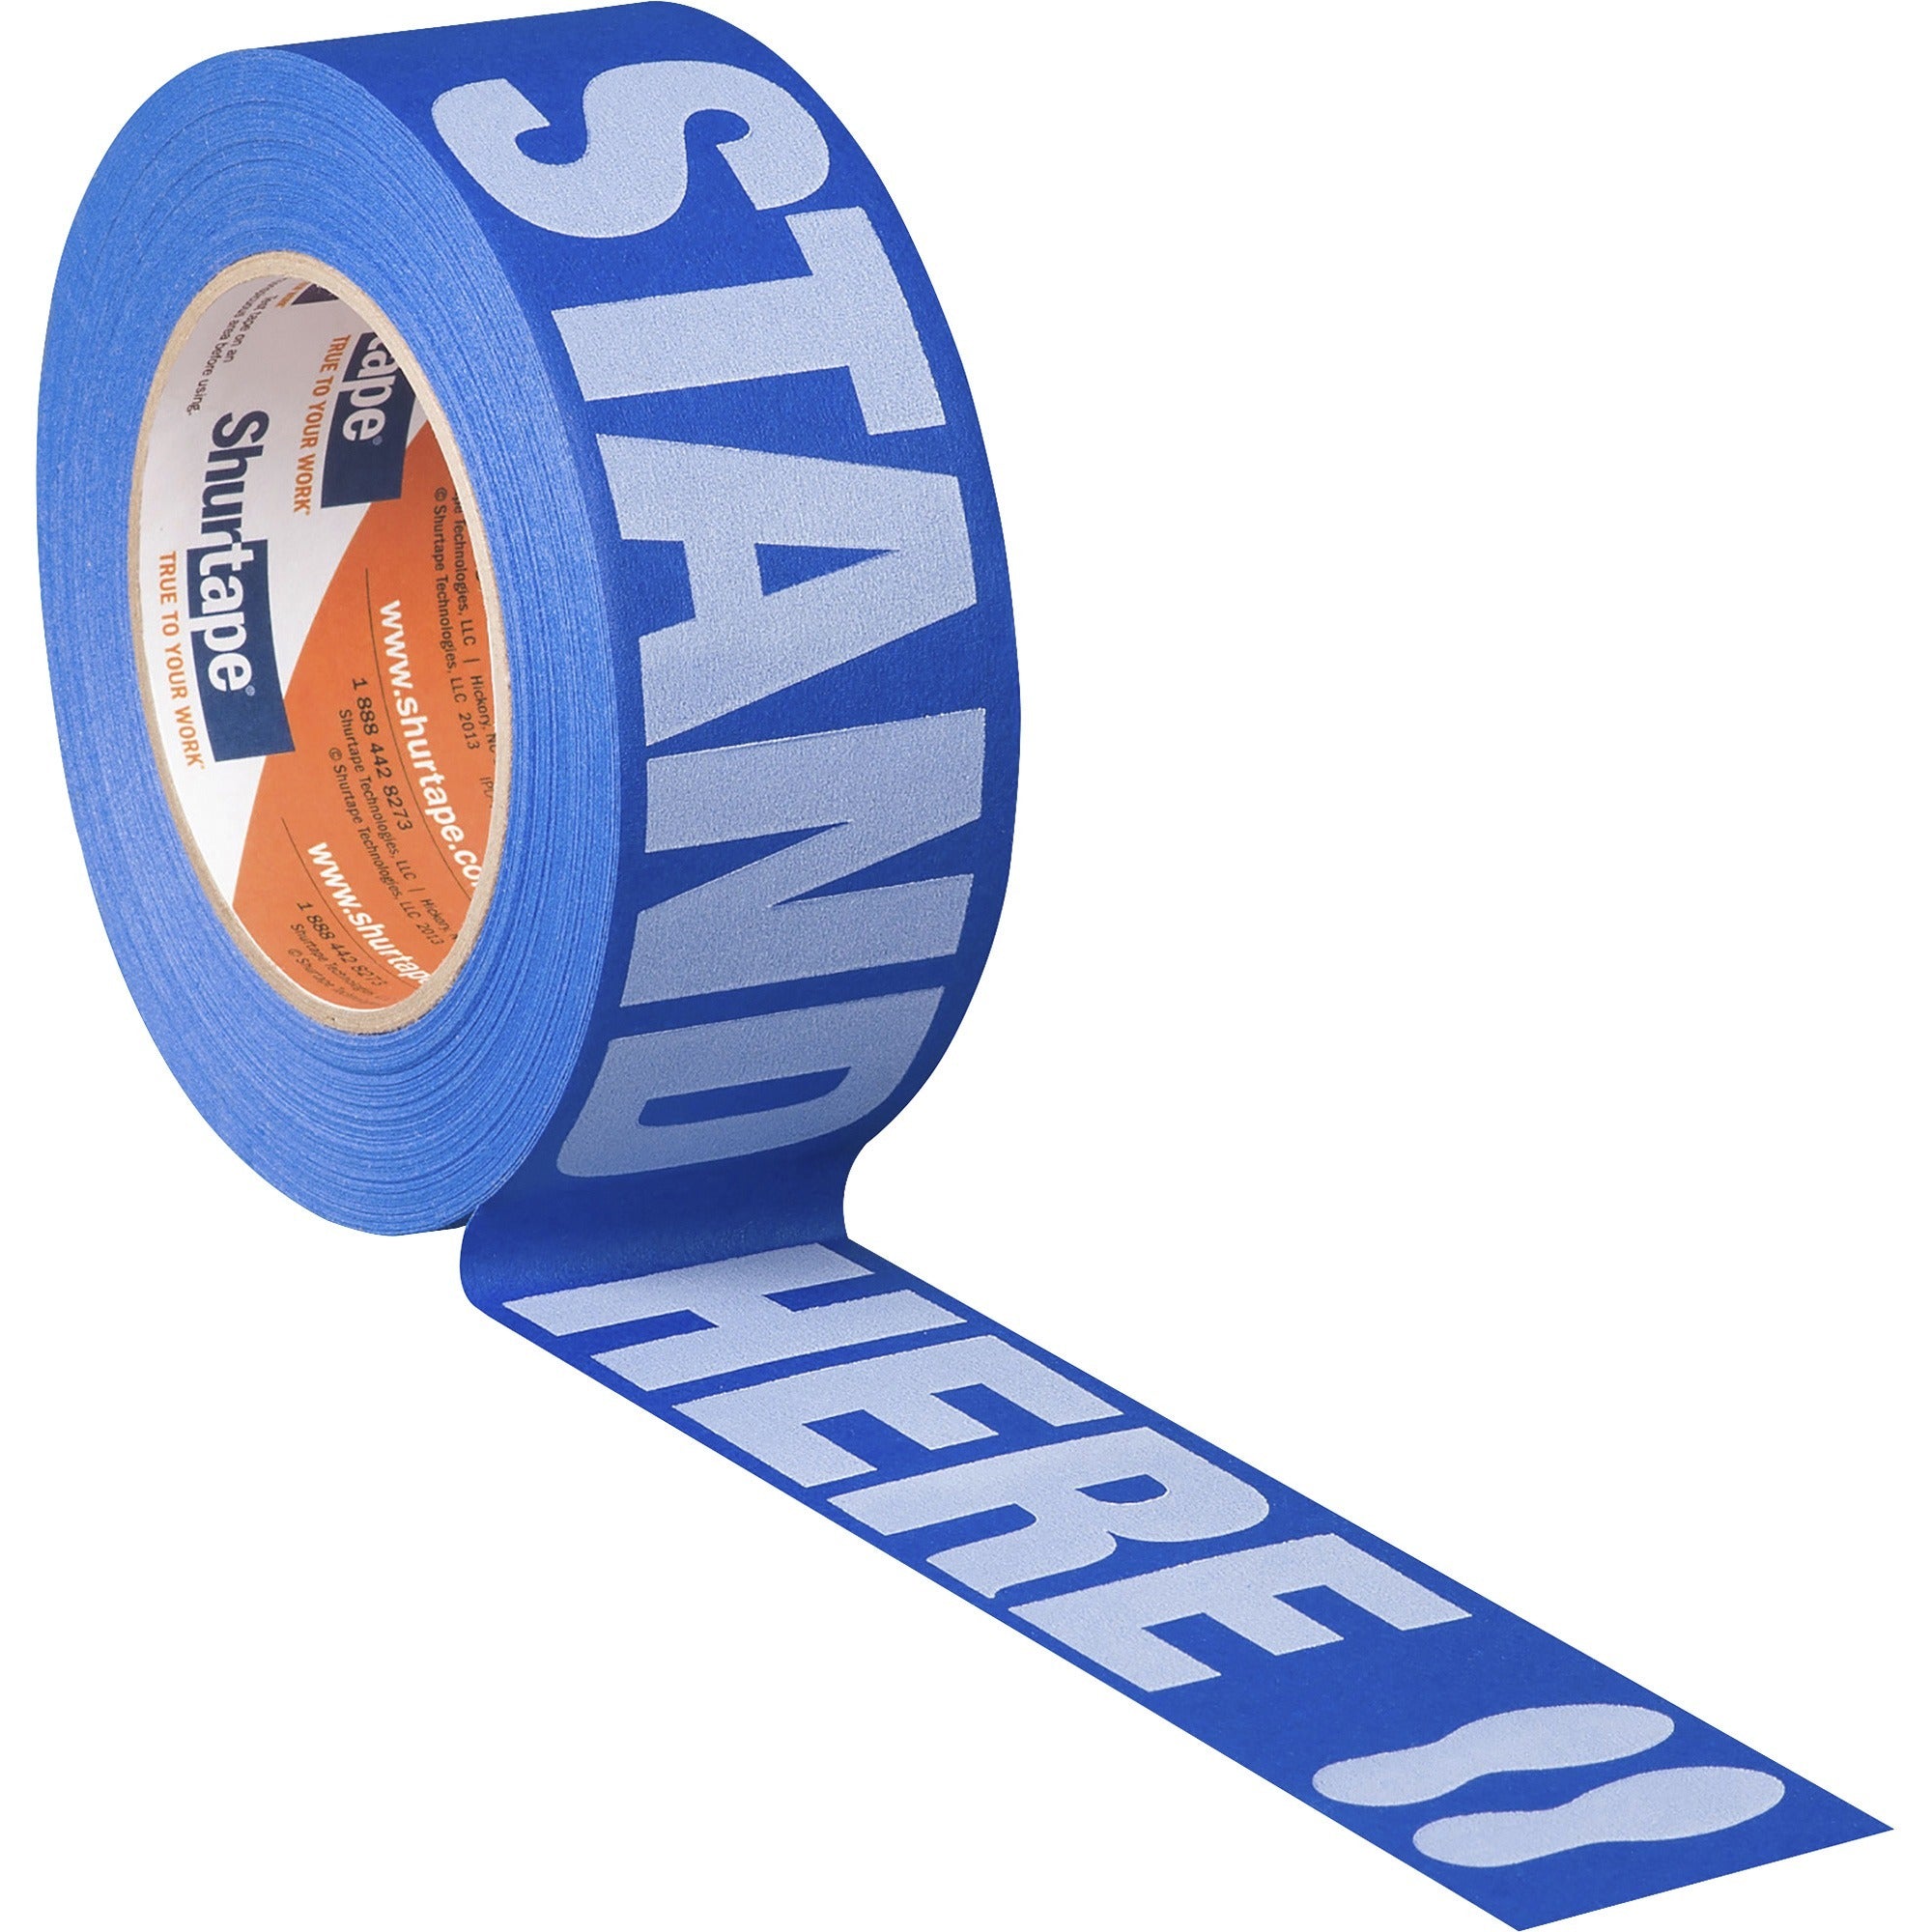 duck-stand-here-floor-marking-tape-60-yd-length-x-188-width-1-roll-100-per-roll-blue_duc105156 - 1